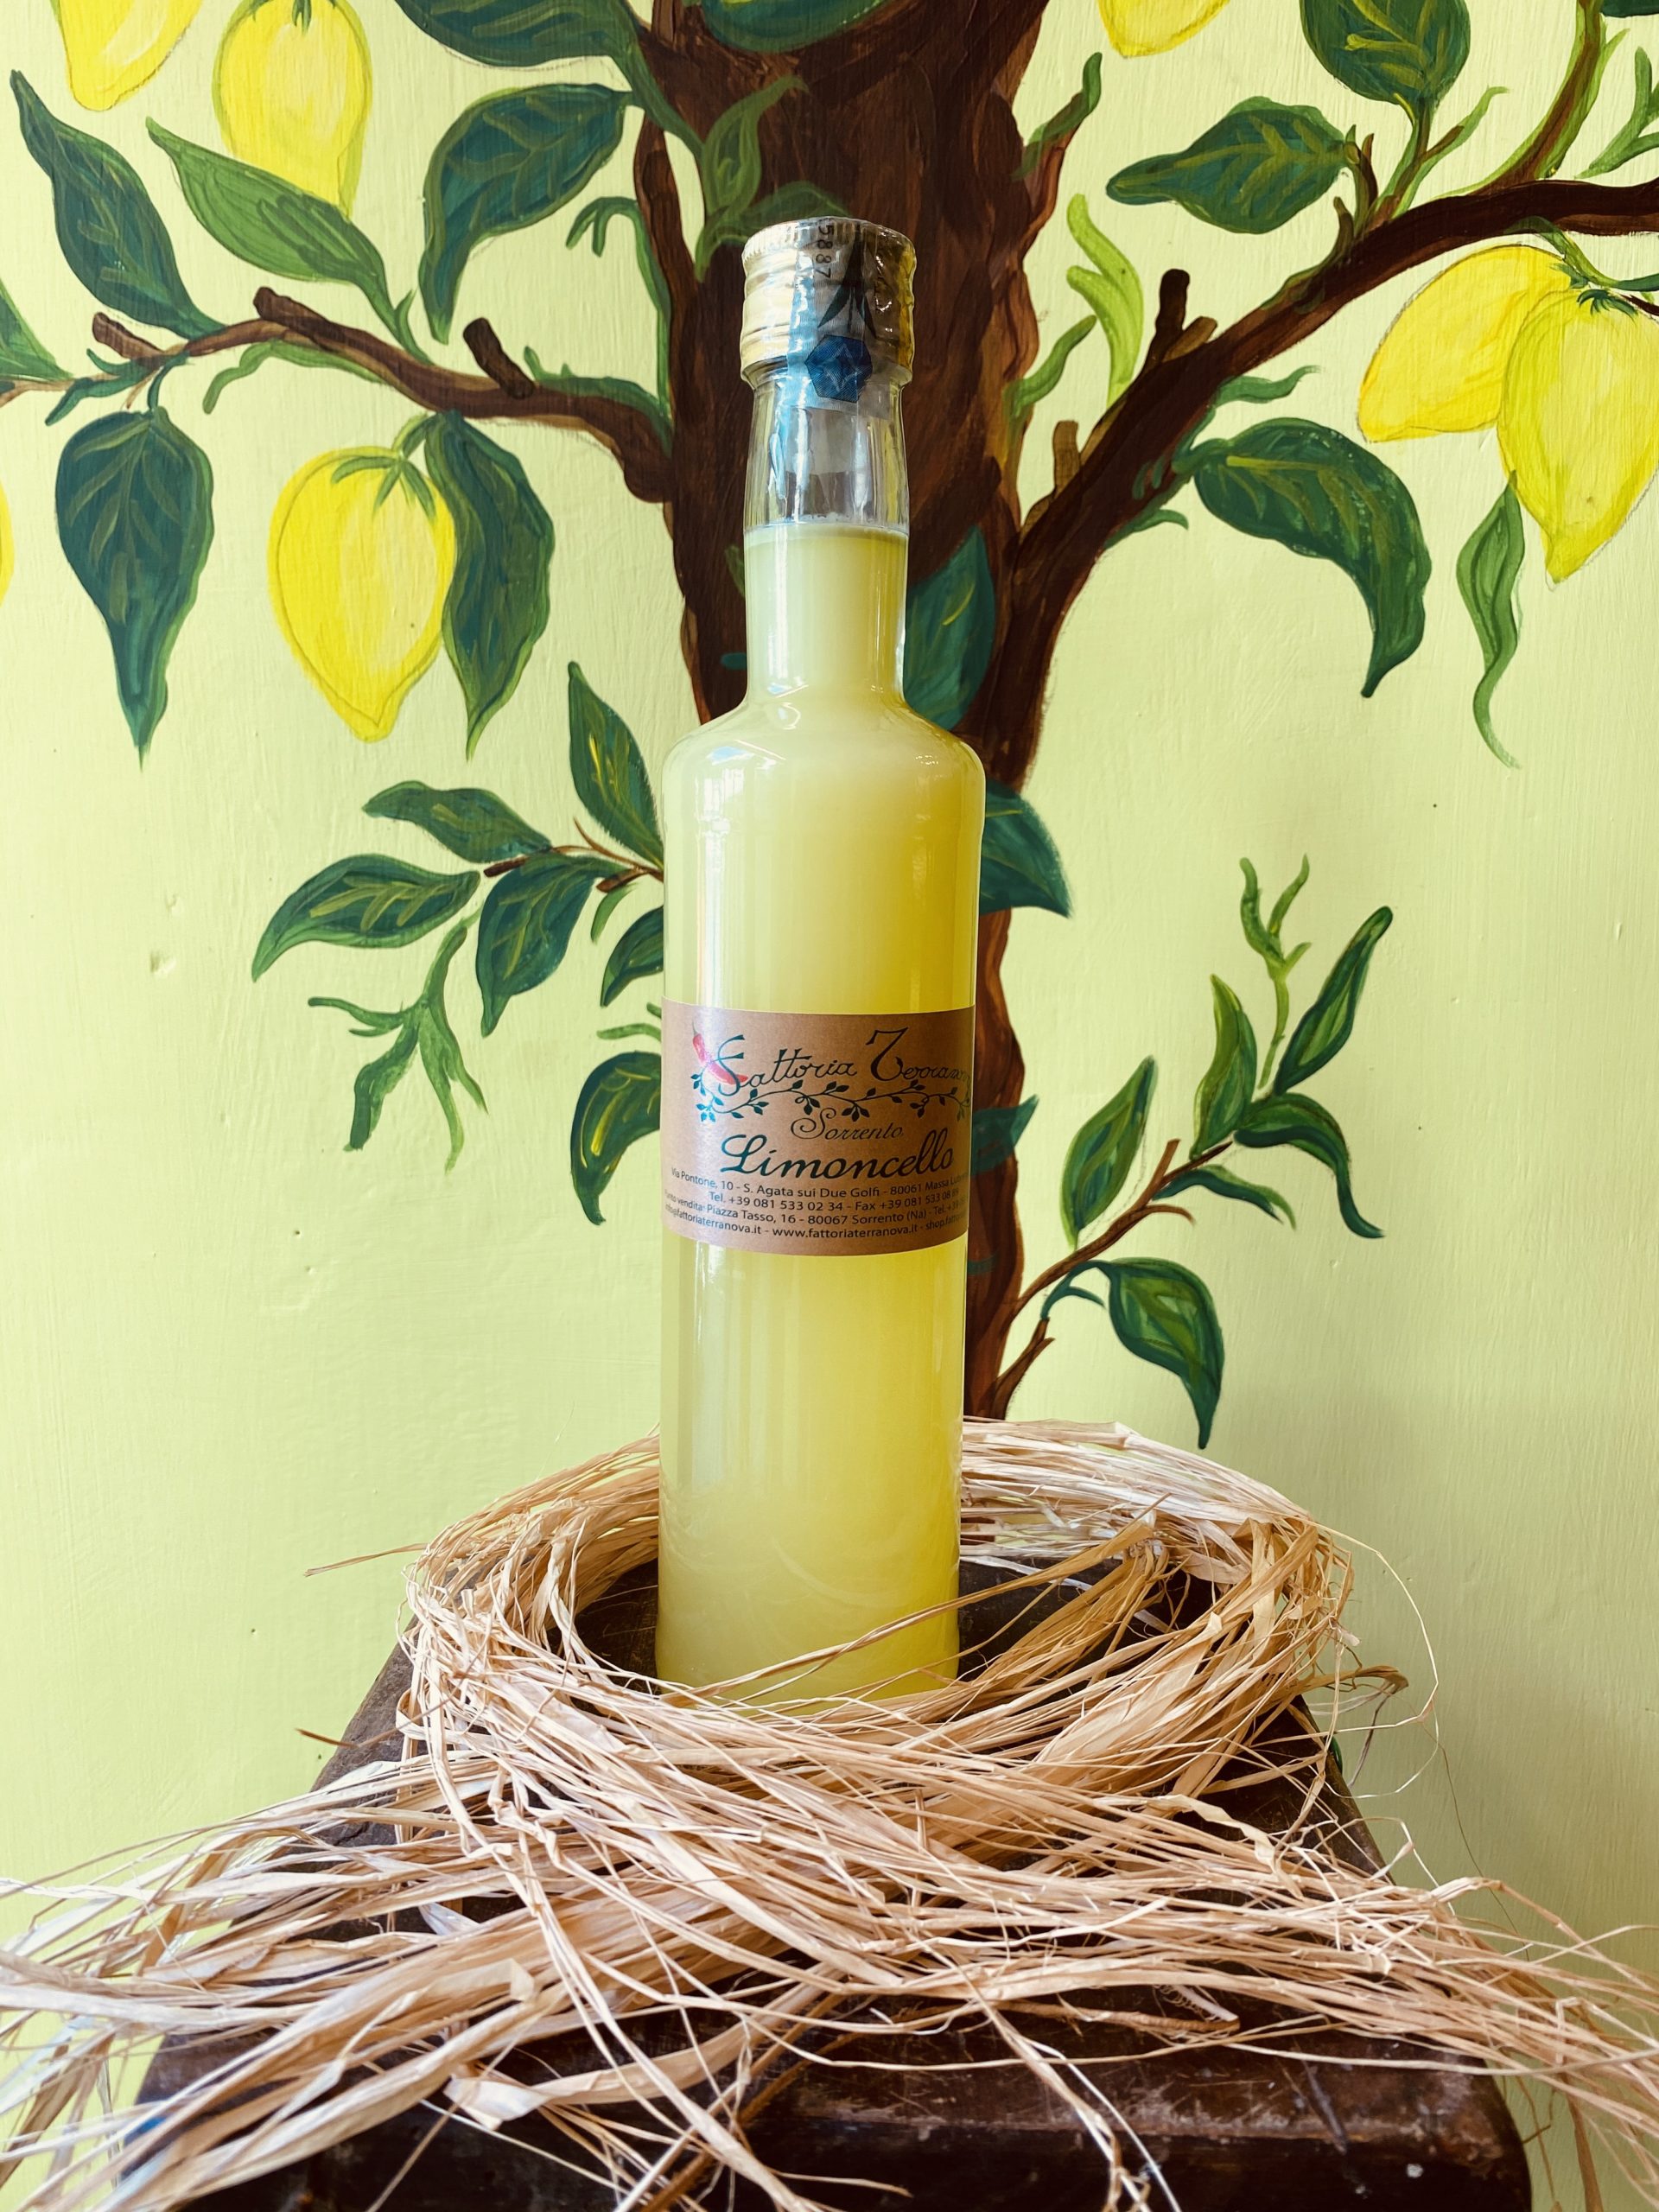 Lemon liqueur “Limoncello” – Fattoria Terranova Shop